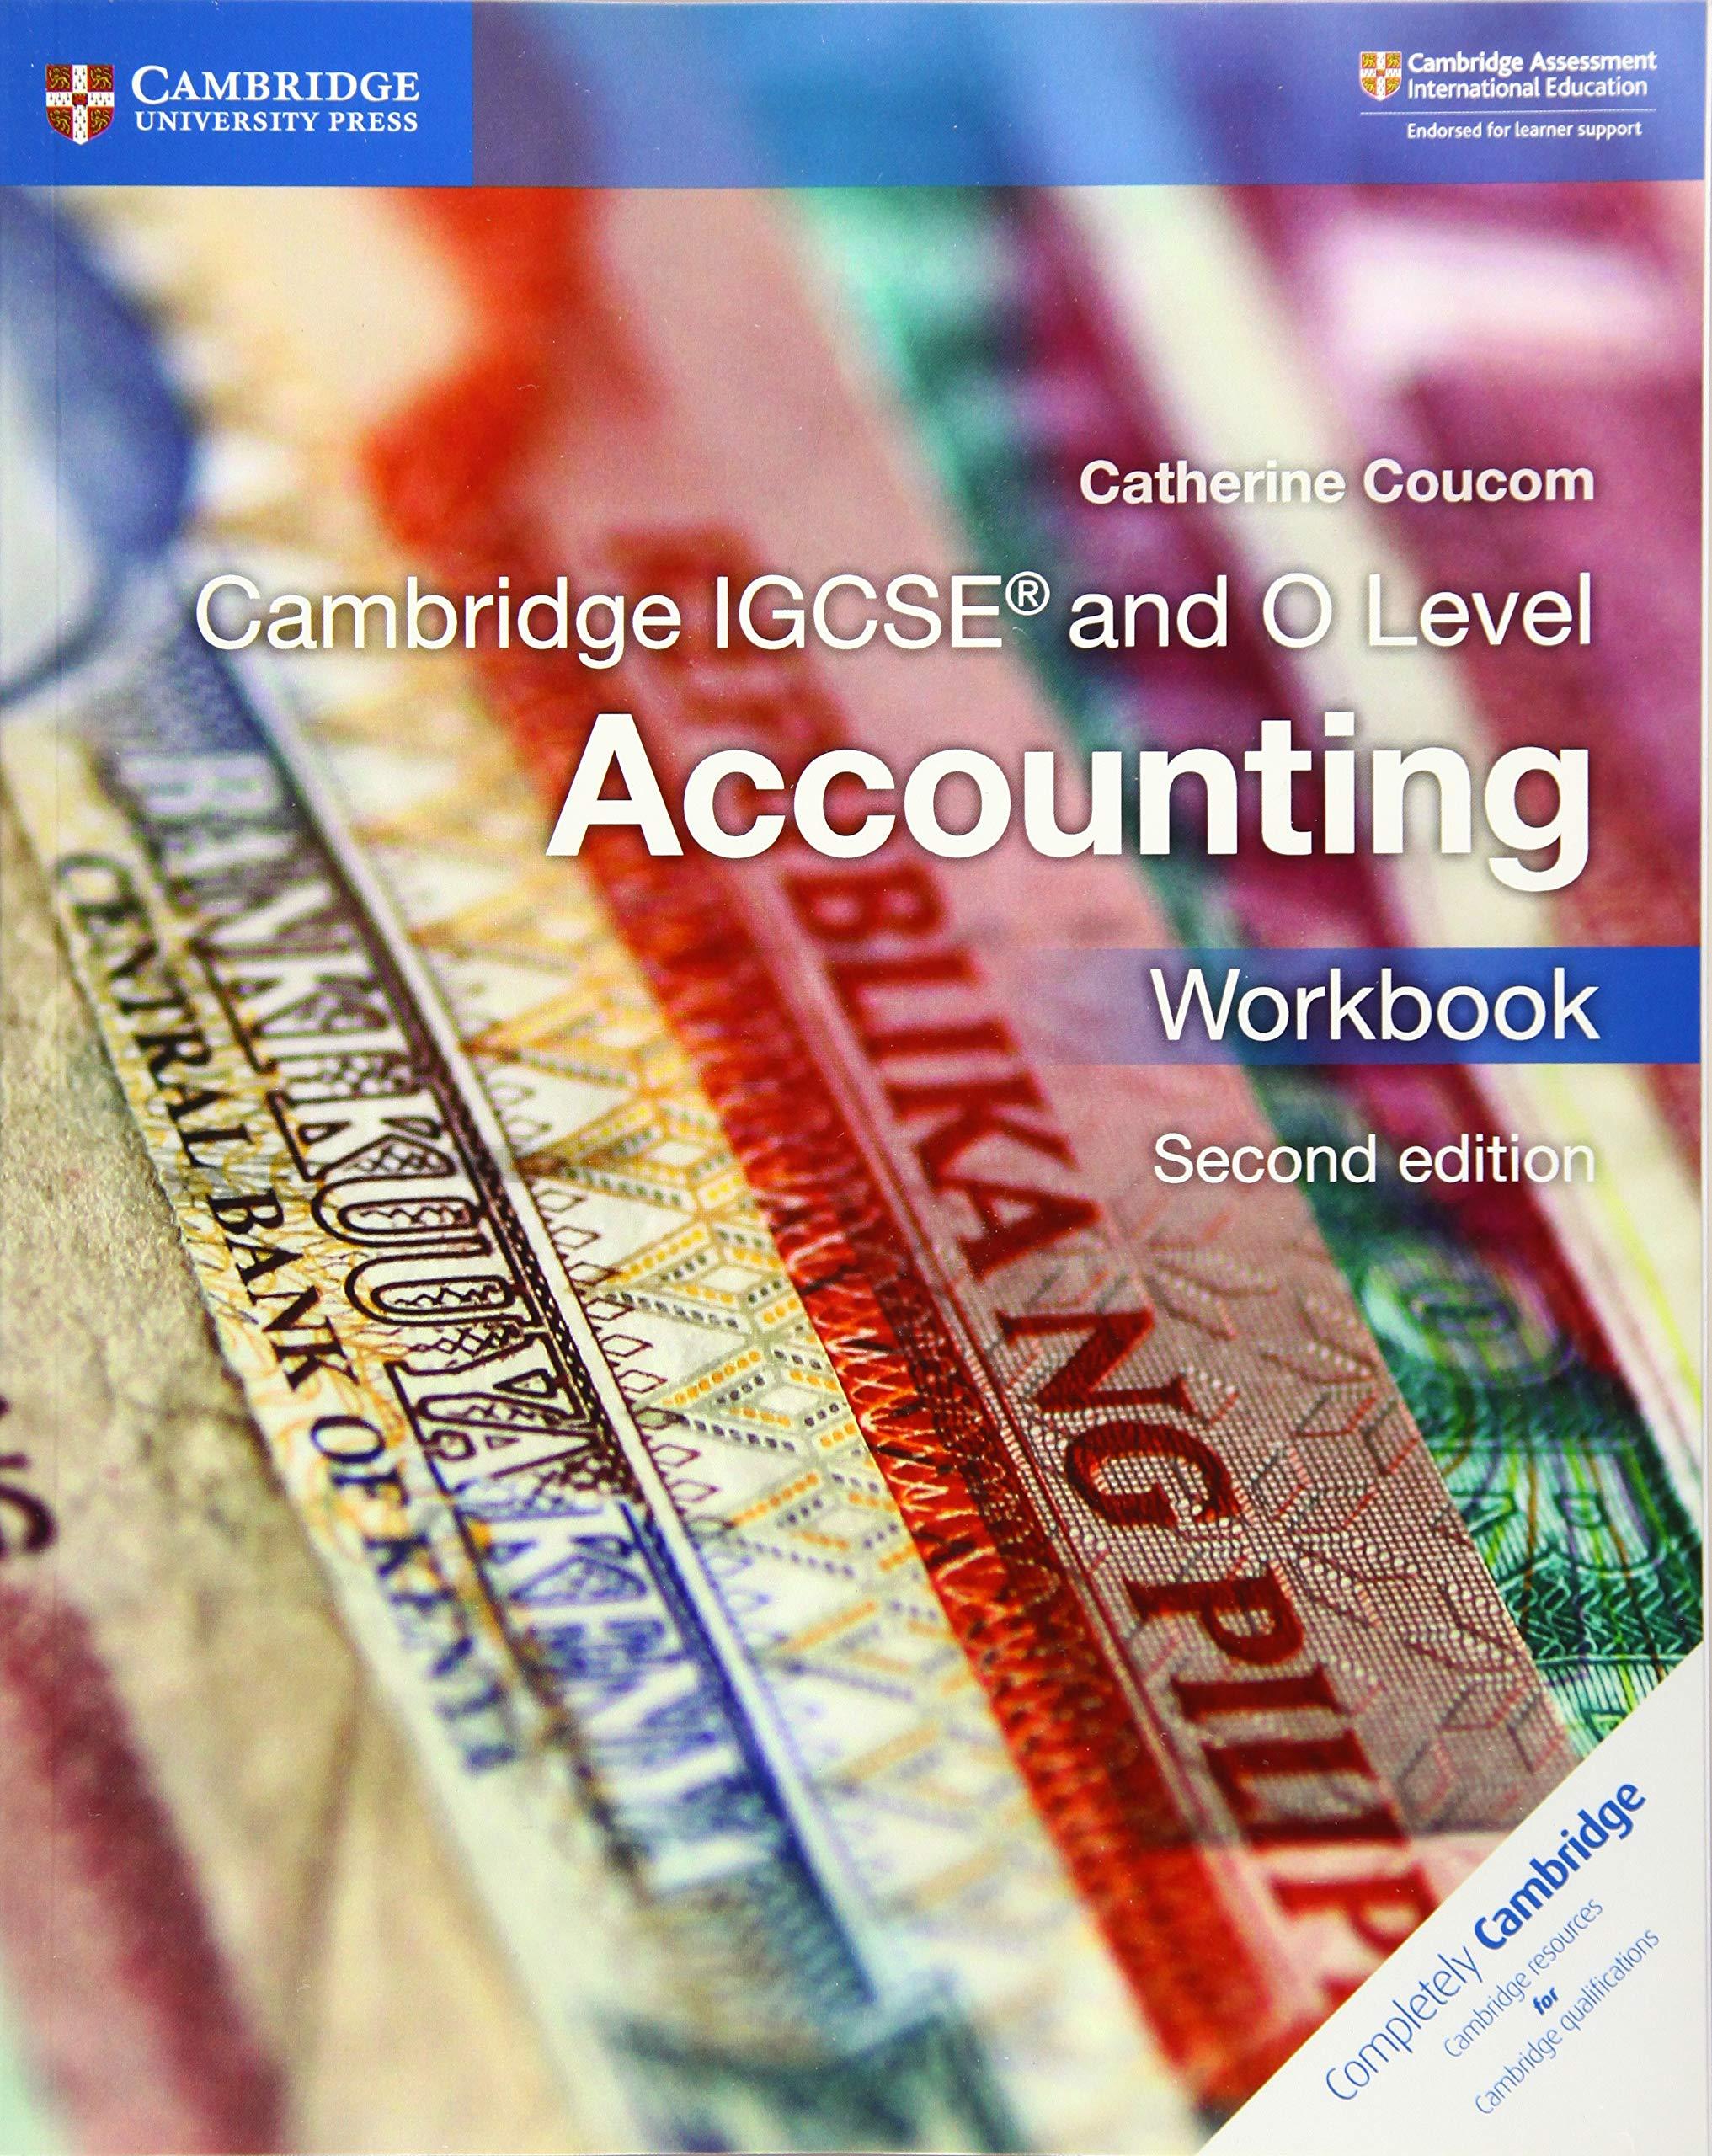 cambridge igcse and o level accounting workbook 2nd edition catherine coucom 1316505057, 978-1316505052